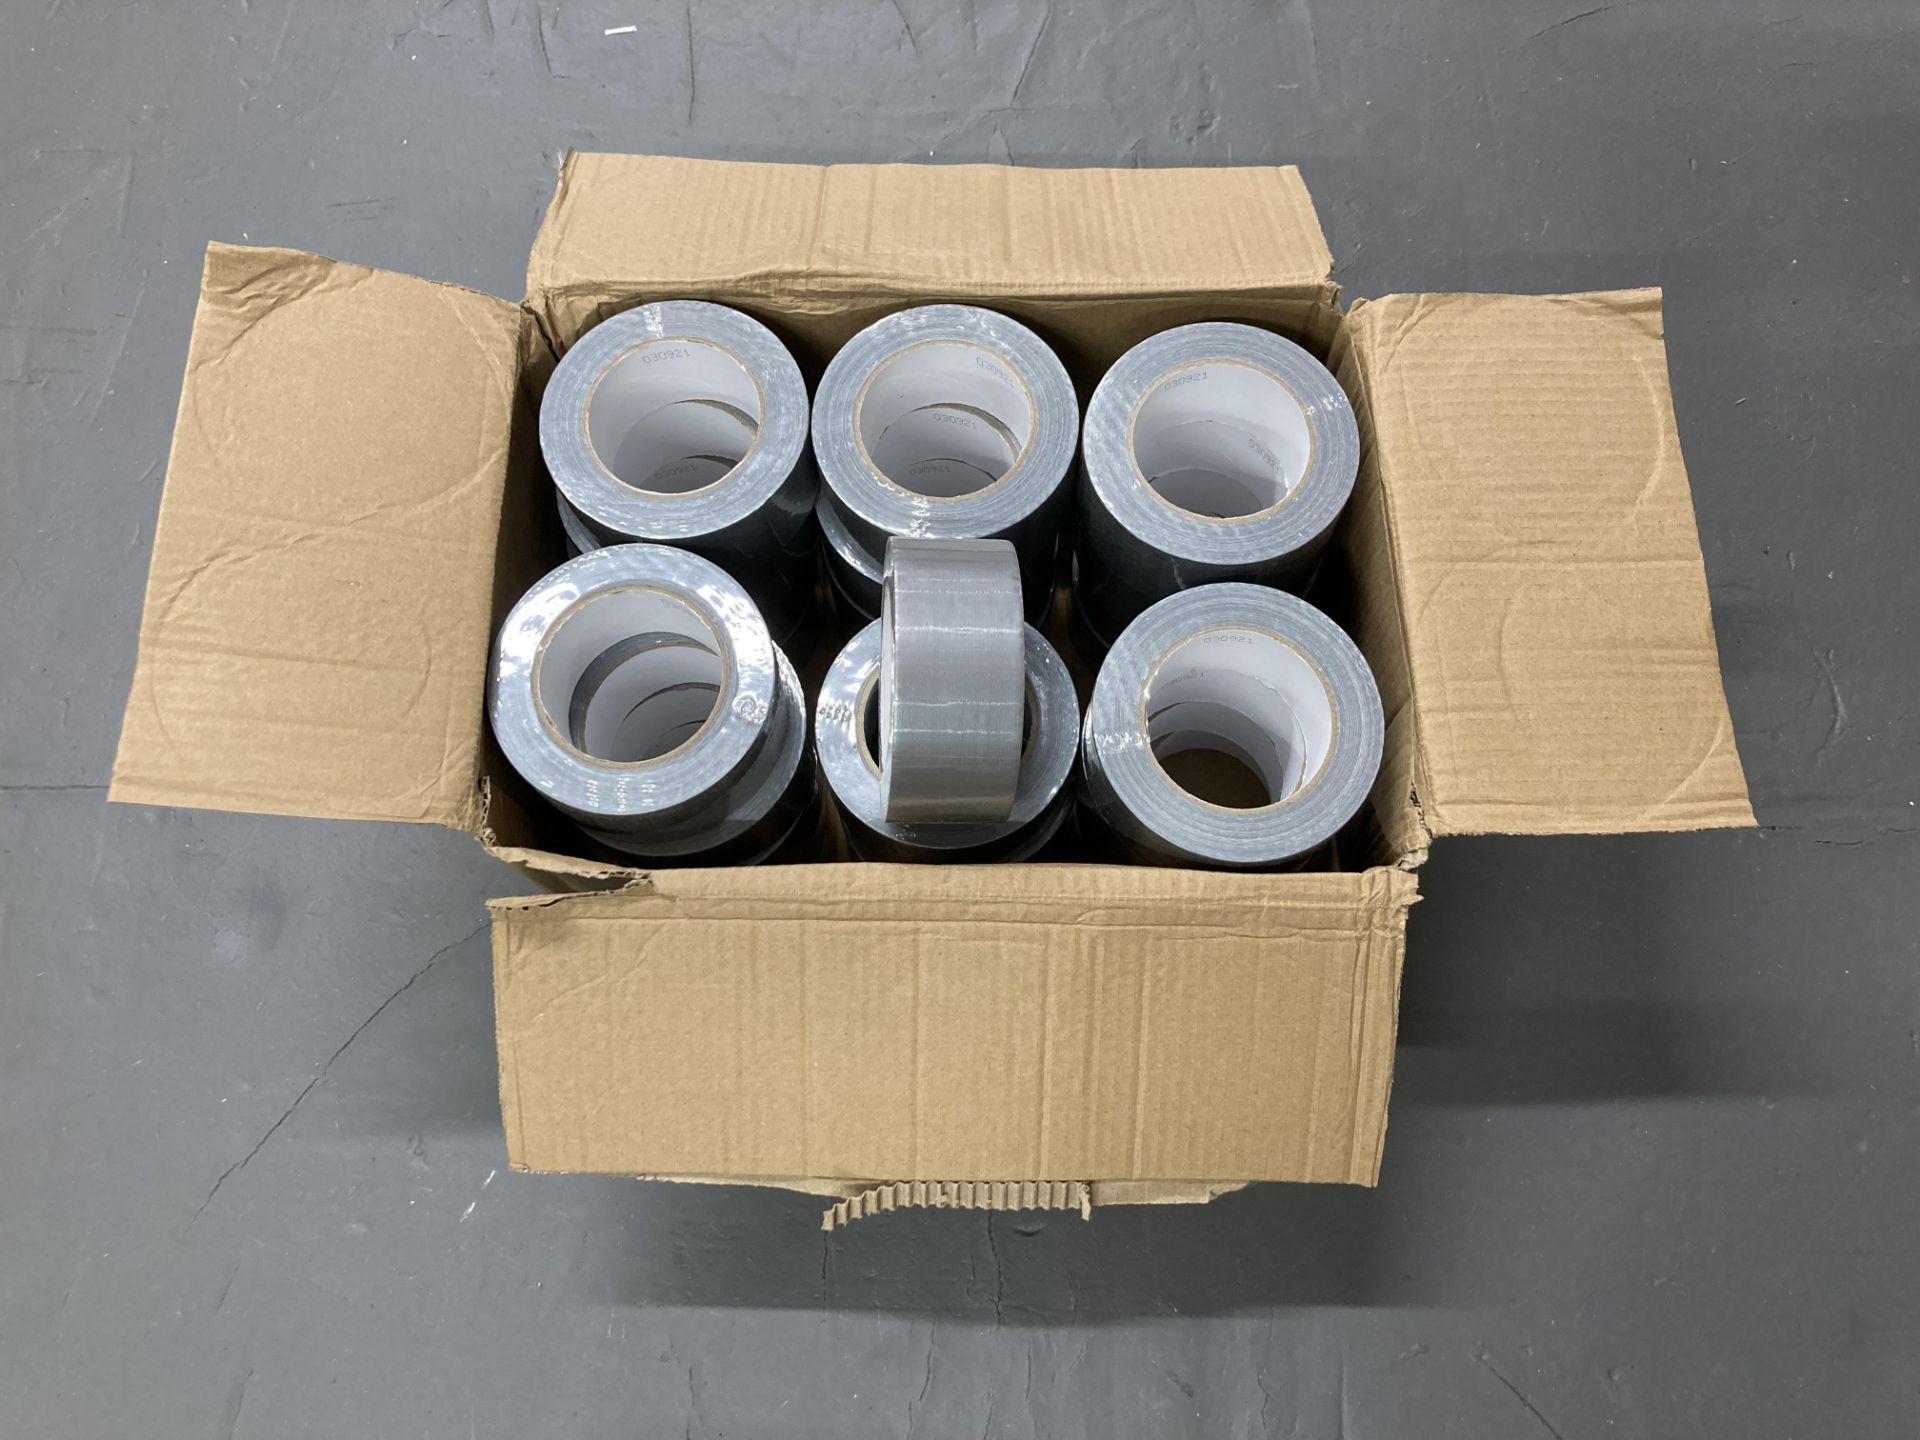 A box of Brittmade Gaffer tape. 24 rolls in a box.